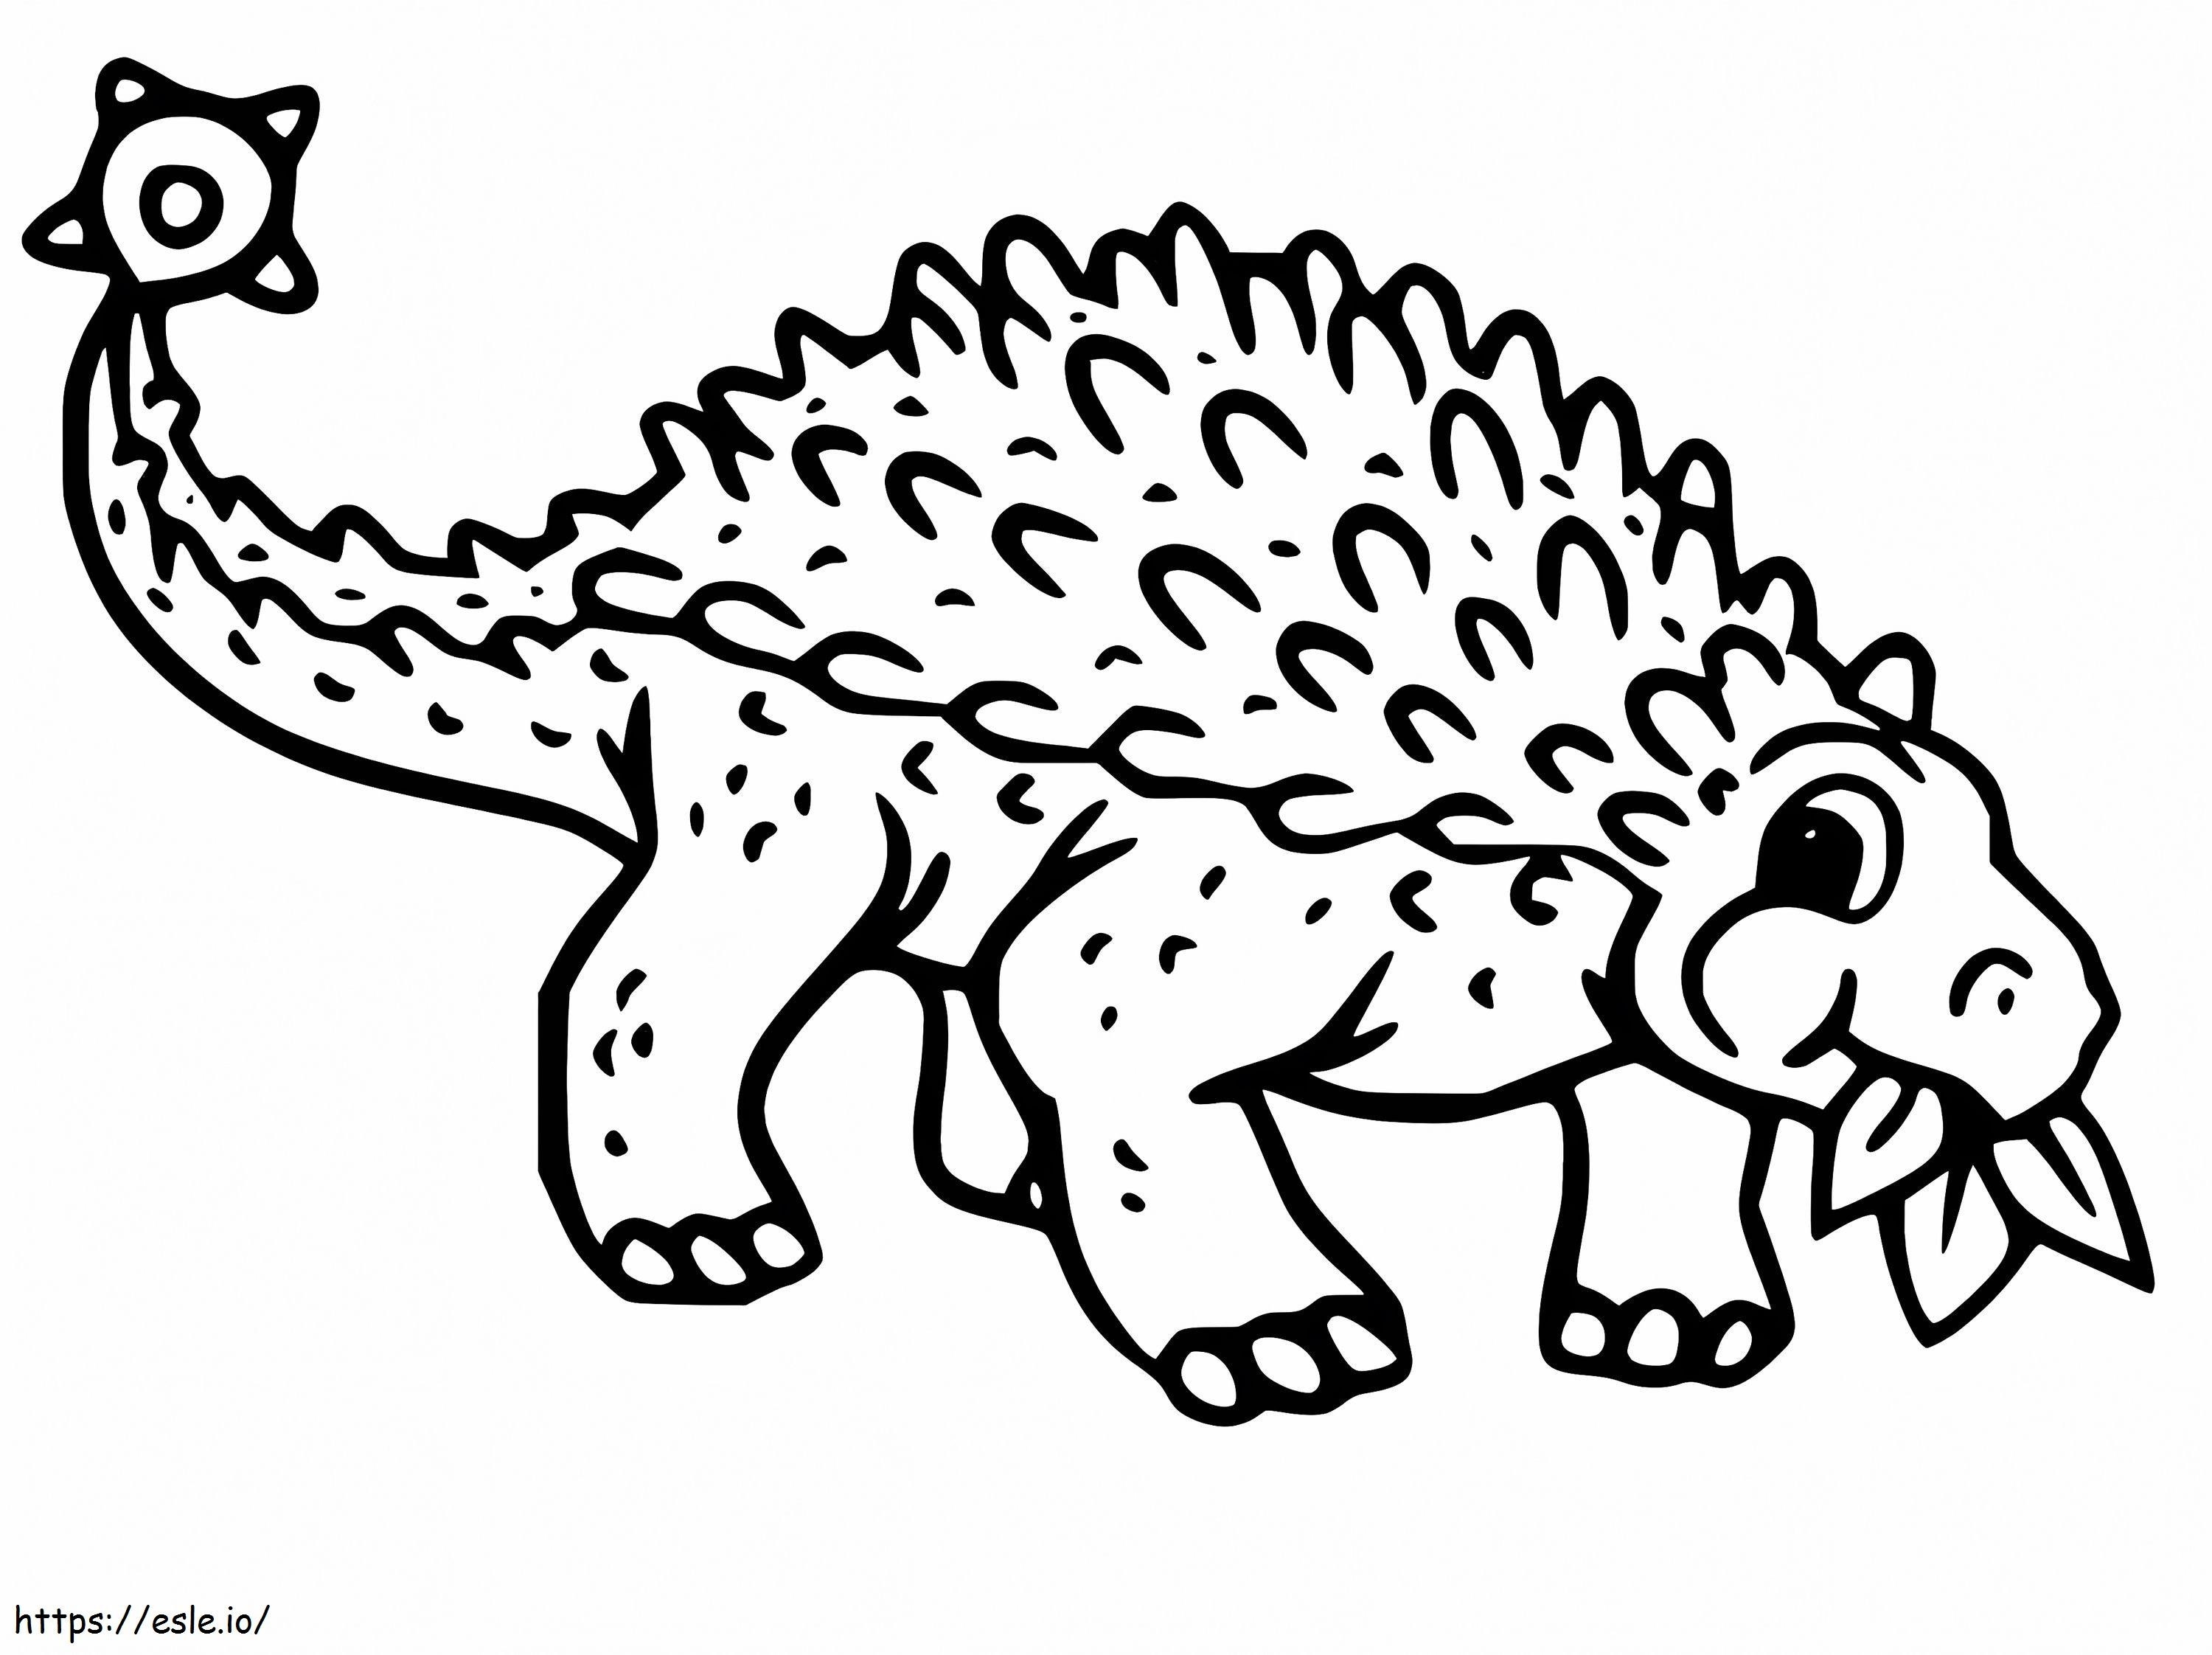 Little Ankylosaurus coloring page